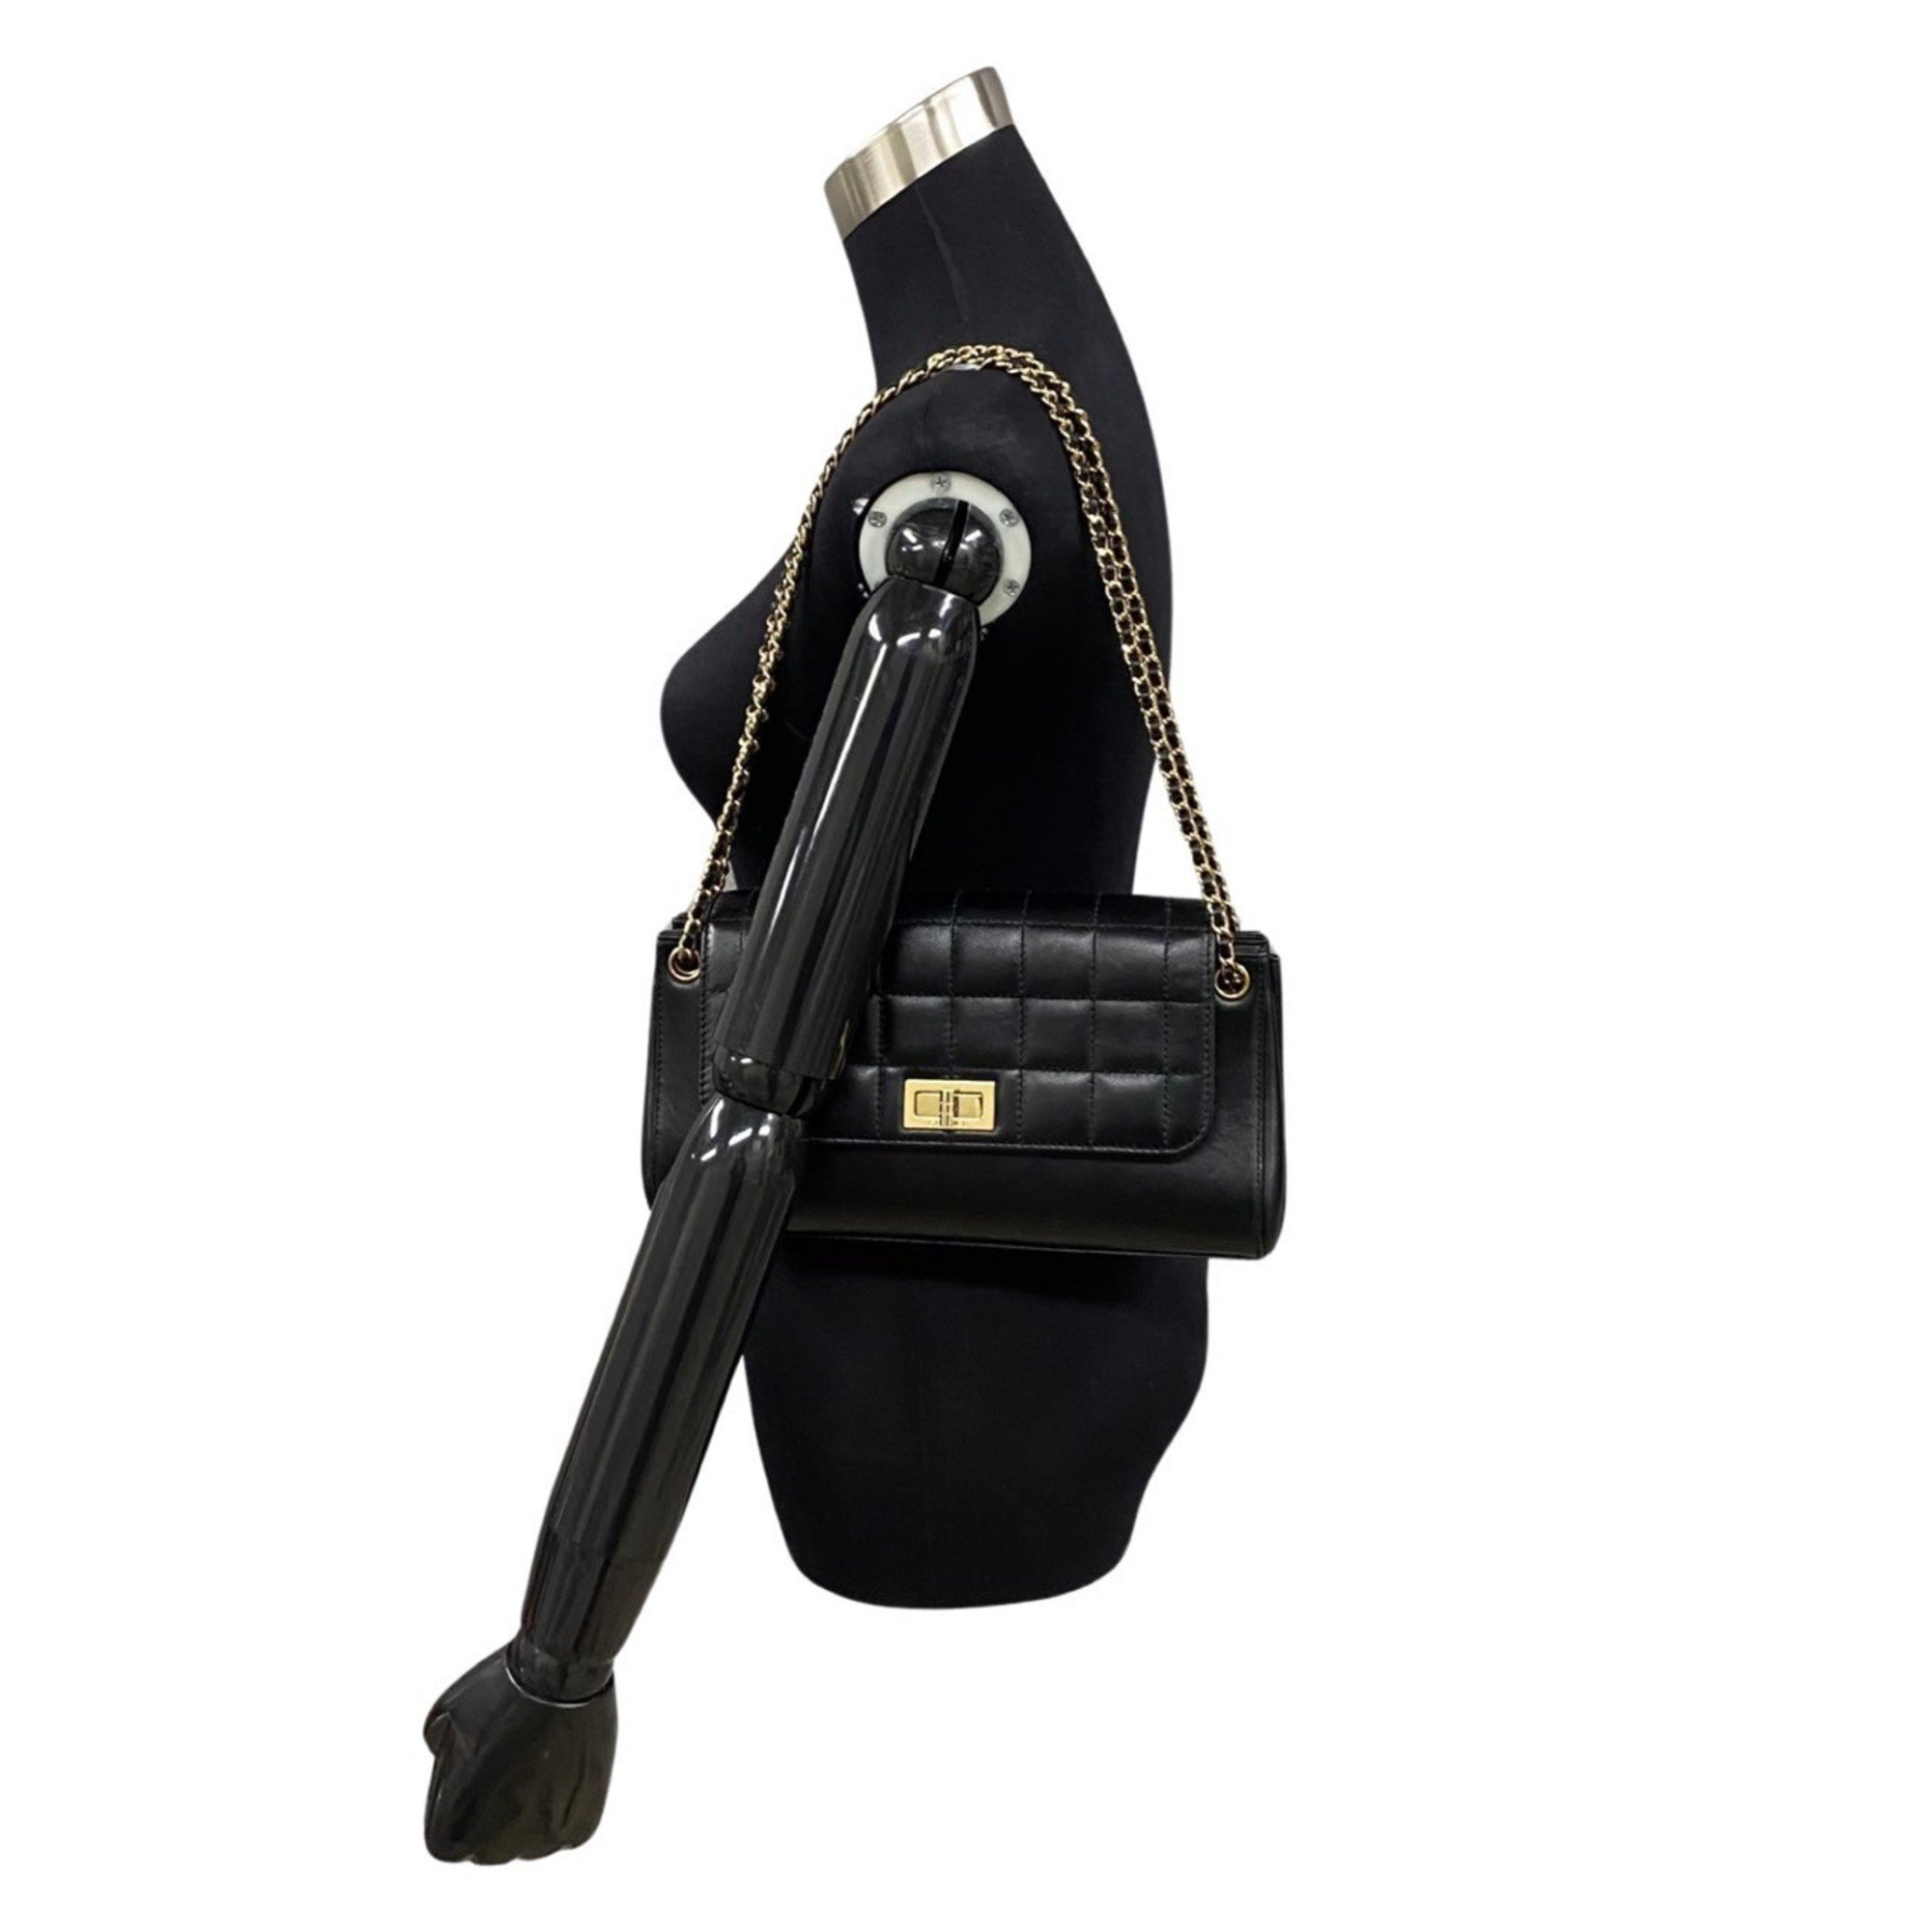 CHANEL Chocolate Bar 2.55 Lambskin Leather Chain Handbag Shoulder Bag 48287